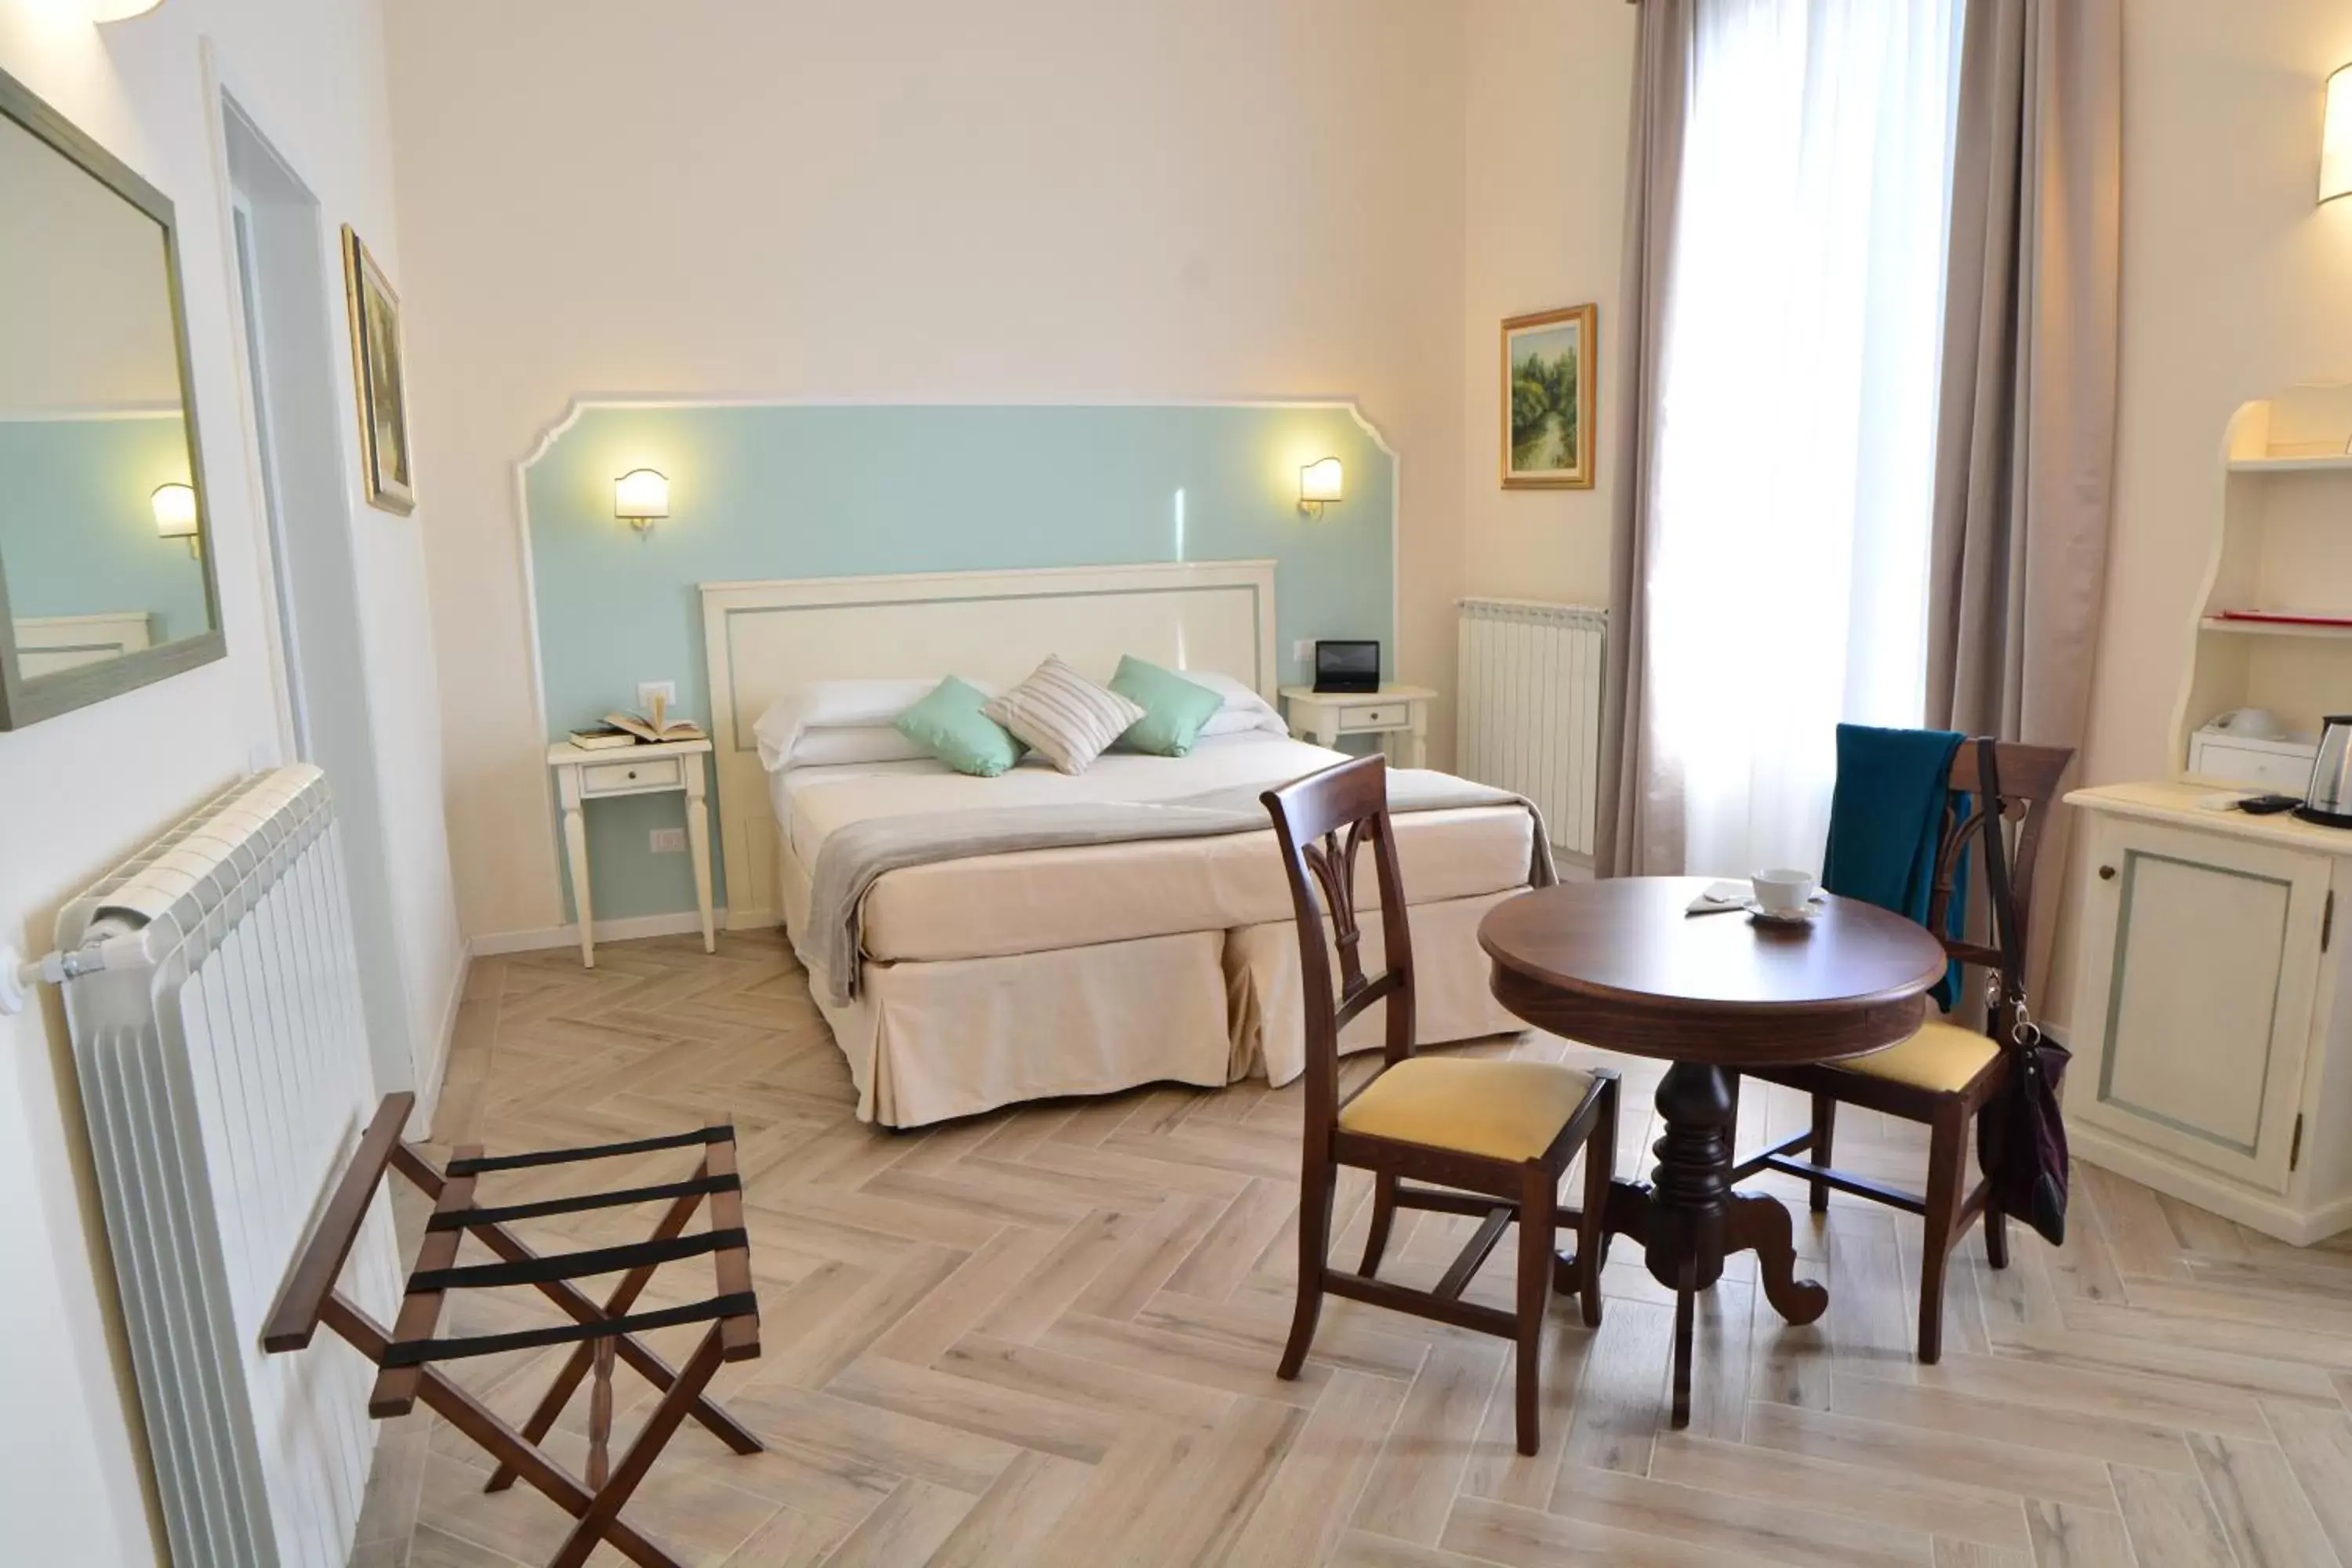 Bed, Room Photo in Dimora Salviati